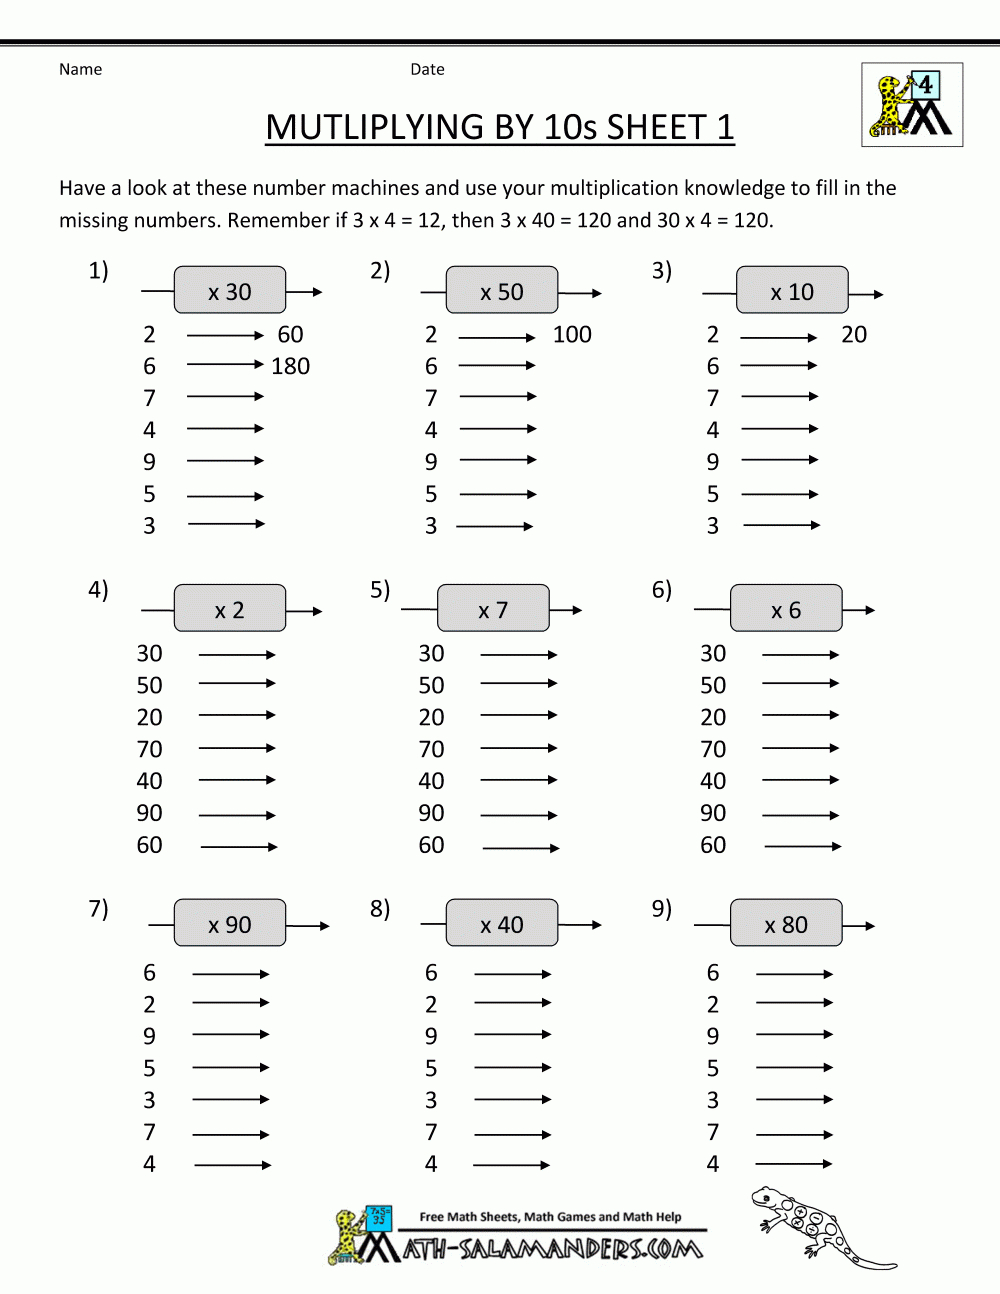 Multiplication Fact Sheets - Free Printable Math Worksheets For 4Th Grade